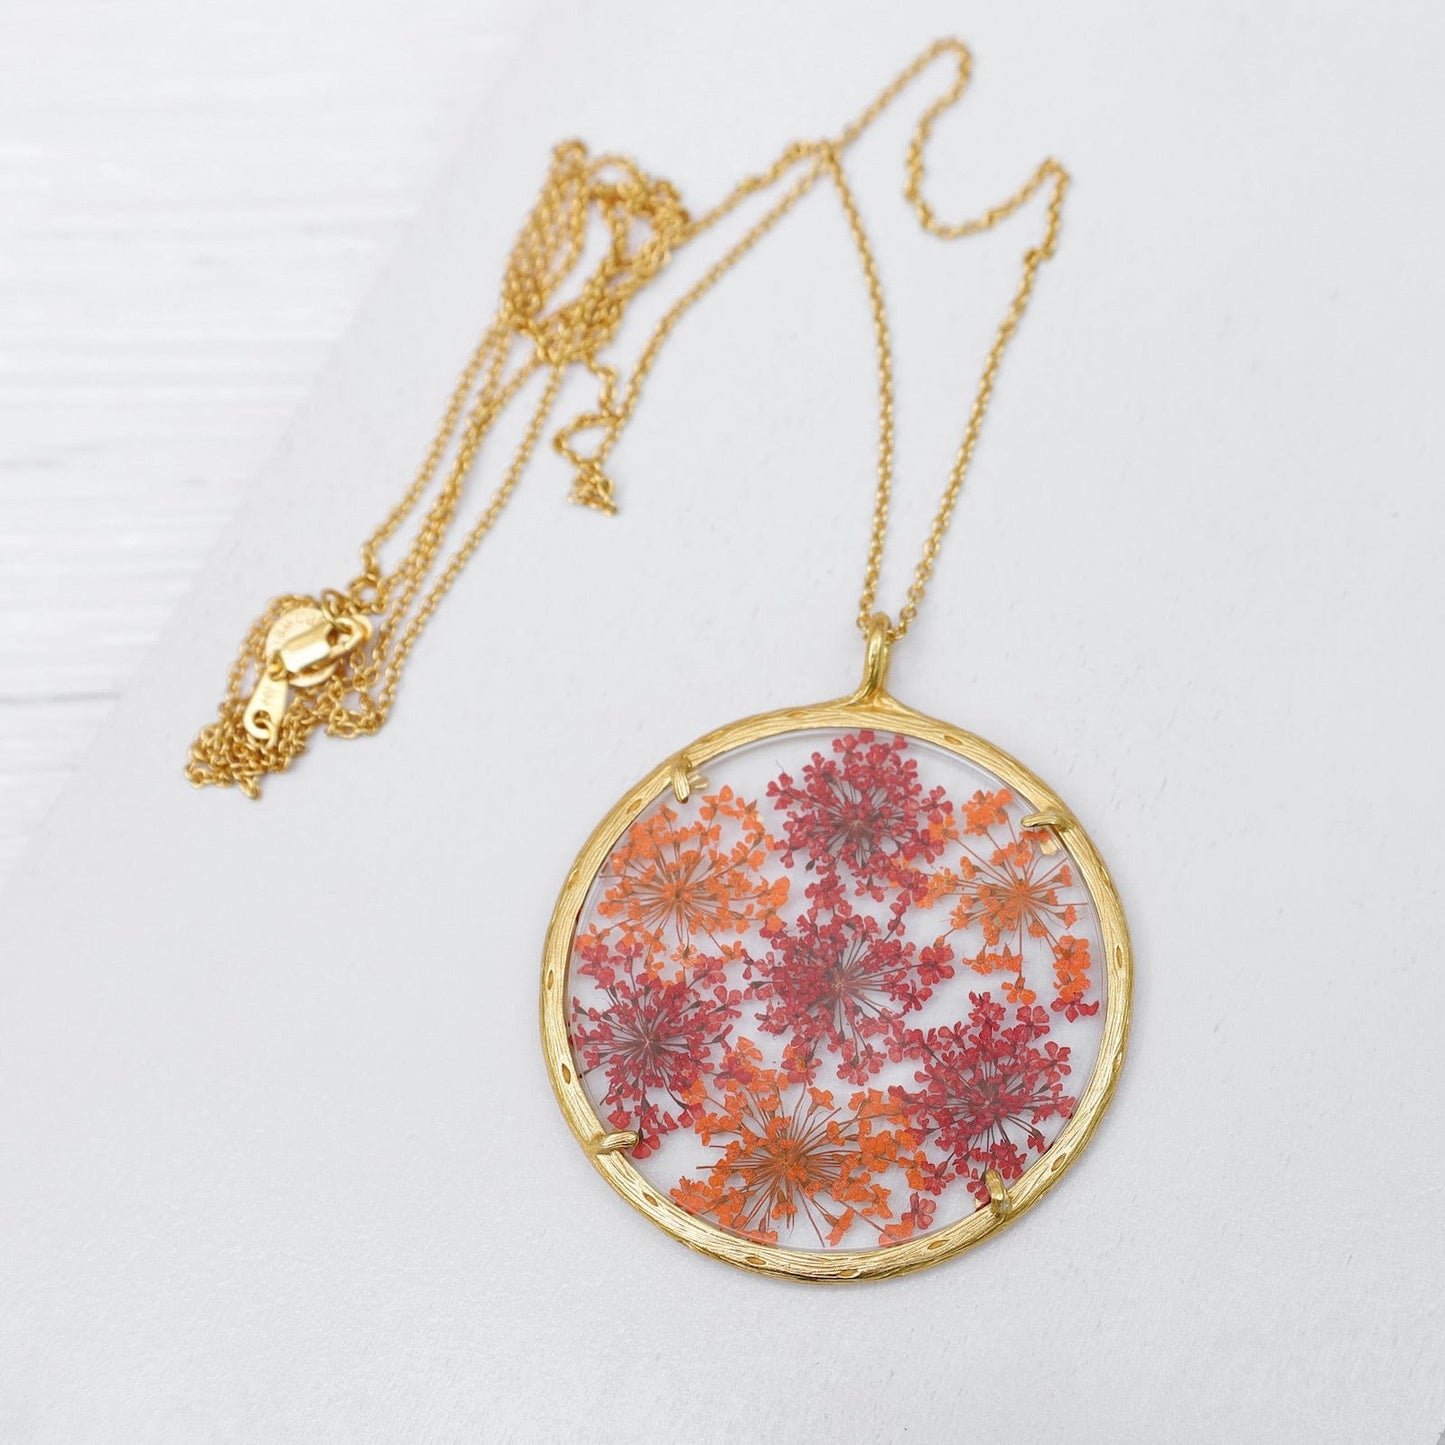 NKL-VRM Red & Orange Queen Anne's Lace Extra Large Botanical Necklace - 18k Gold Vermeil